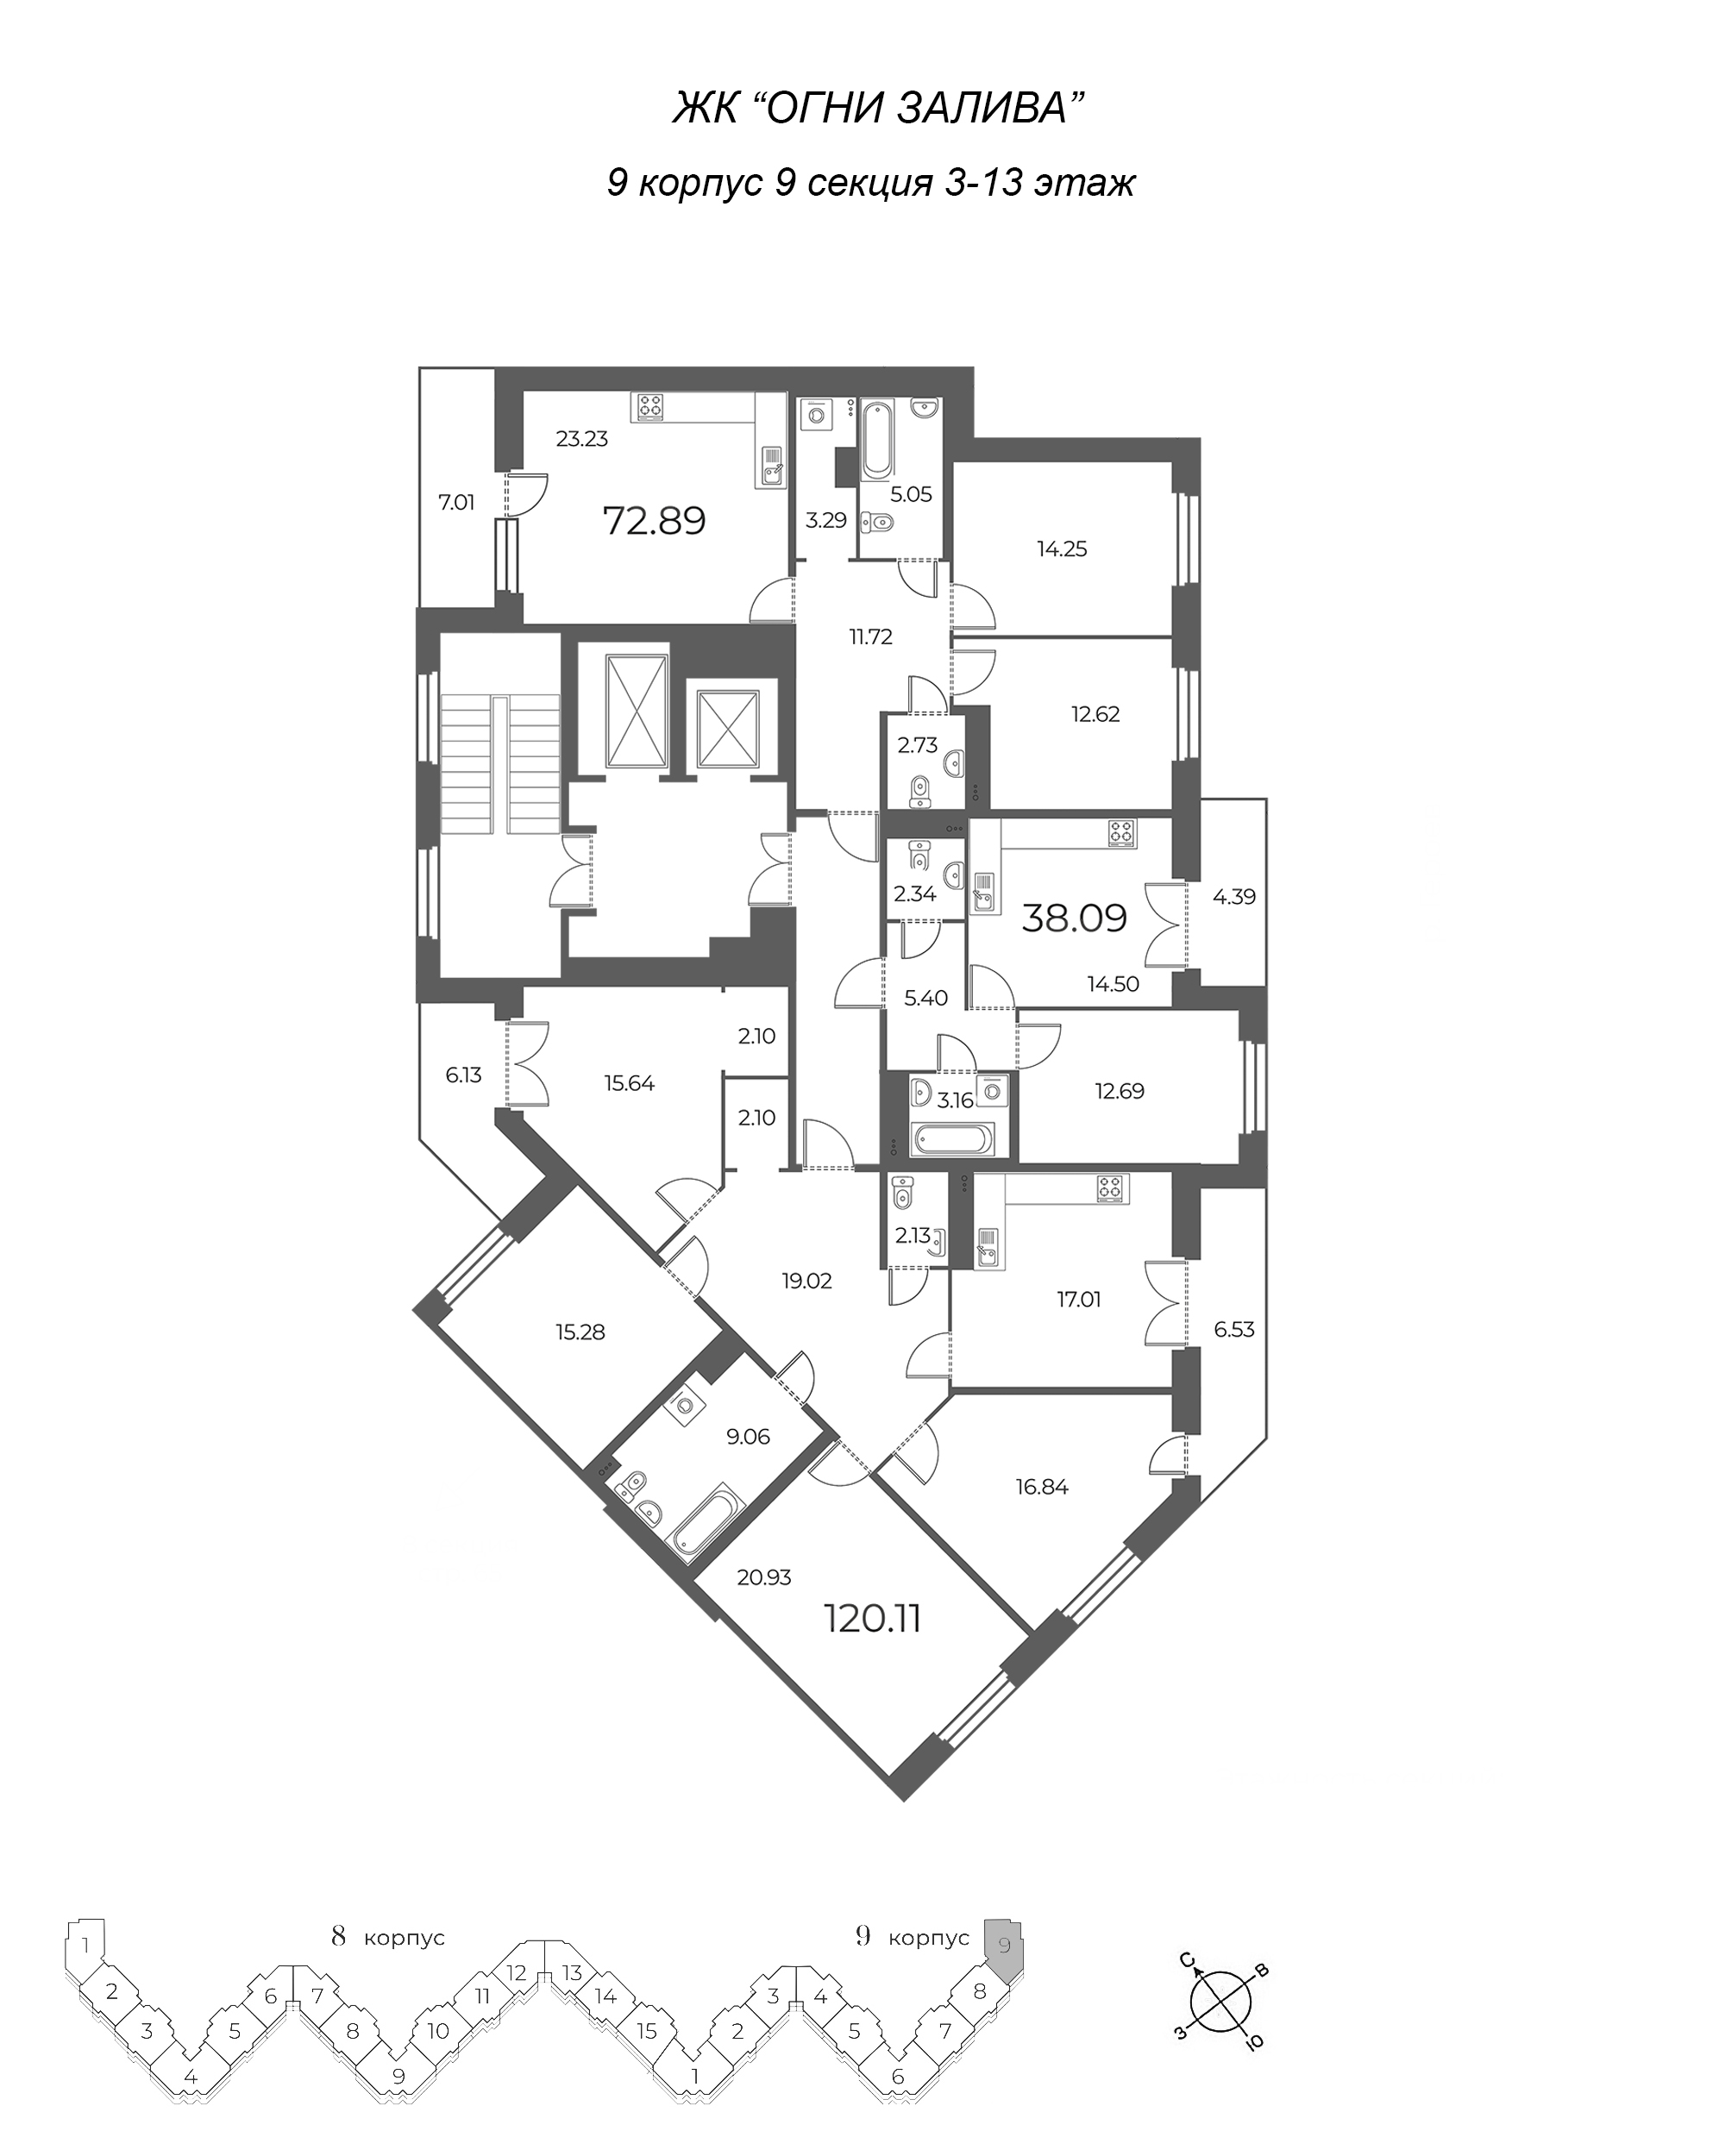 5-комнатная (Евро) квартира, 126.44 м² - планировка этажа